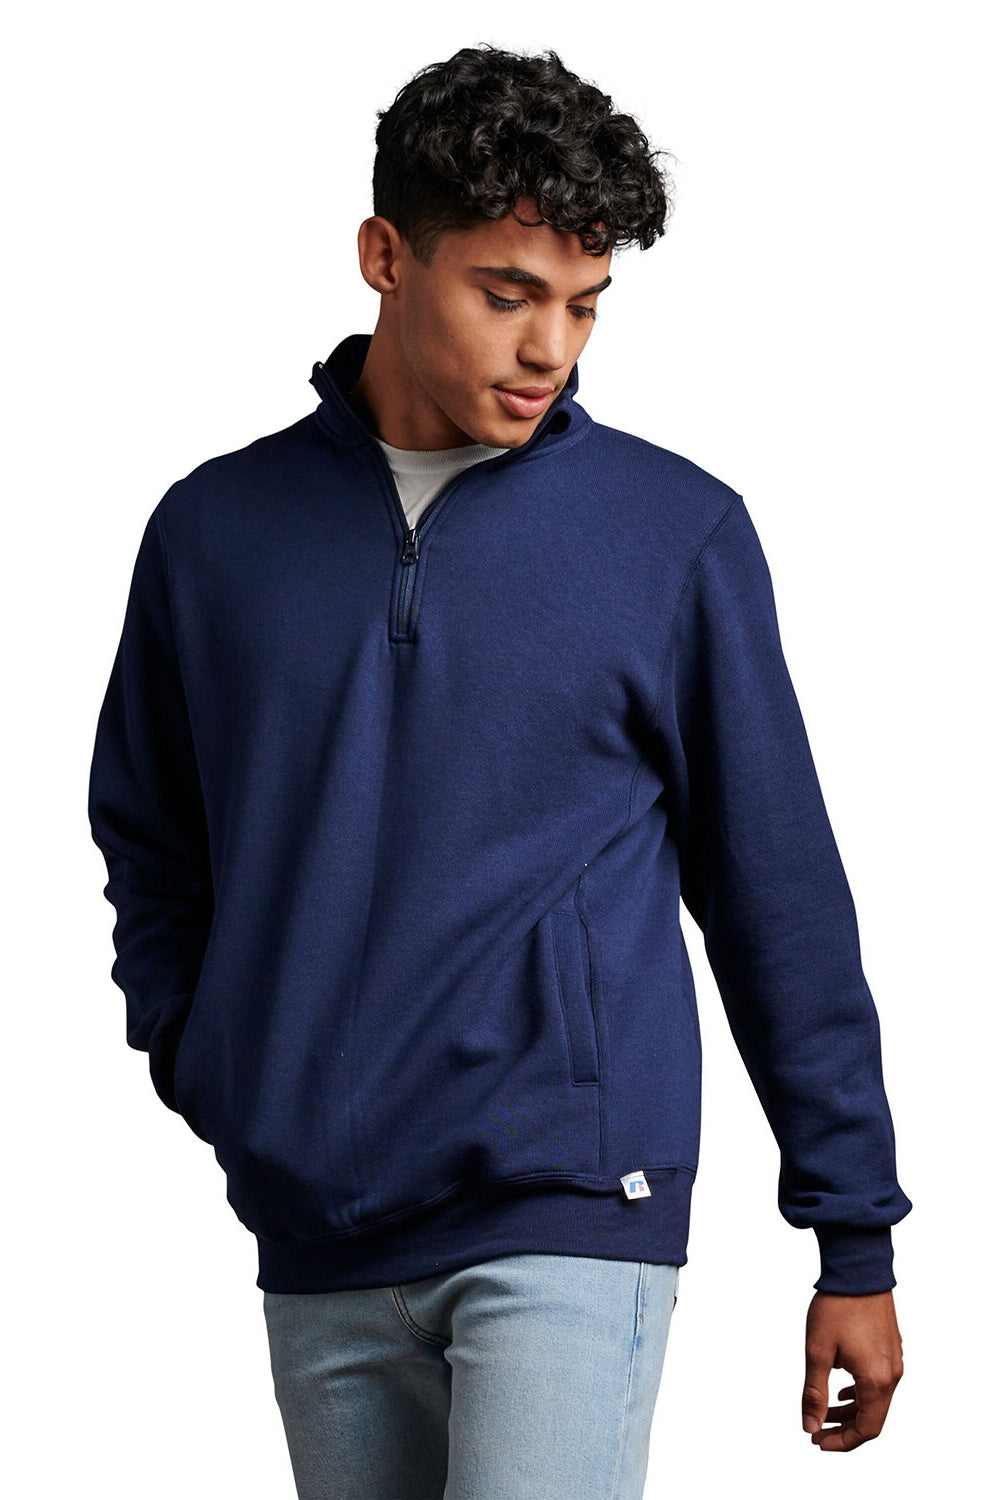 Russell Athletic 1Z4HBM Mens Dri-Power Fleece 1/4 Zip Sweatshirt Navy Blue Front